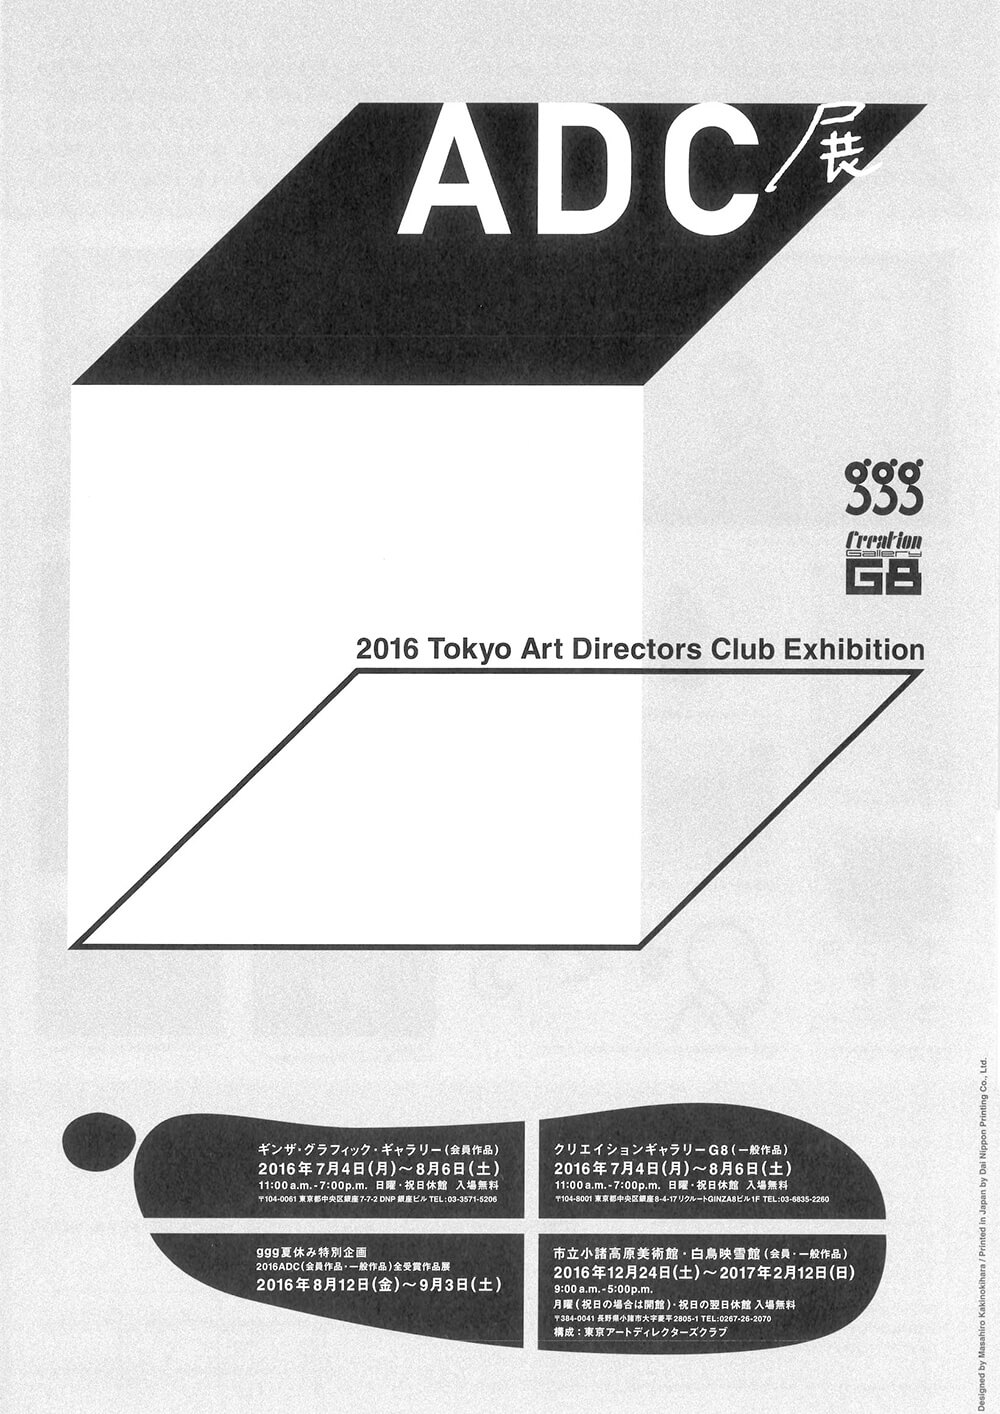 Adc展 16 Fajp フライヤー チラシのグラフィックデザイン参考サイト